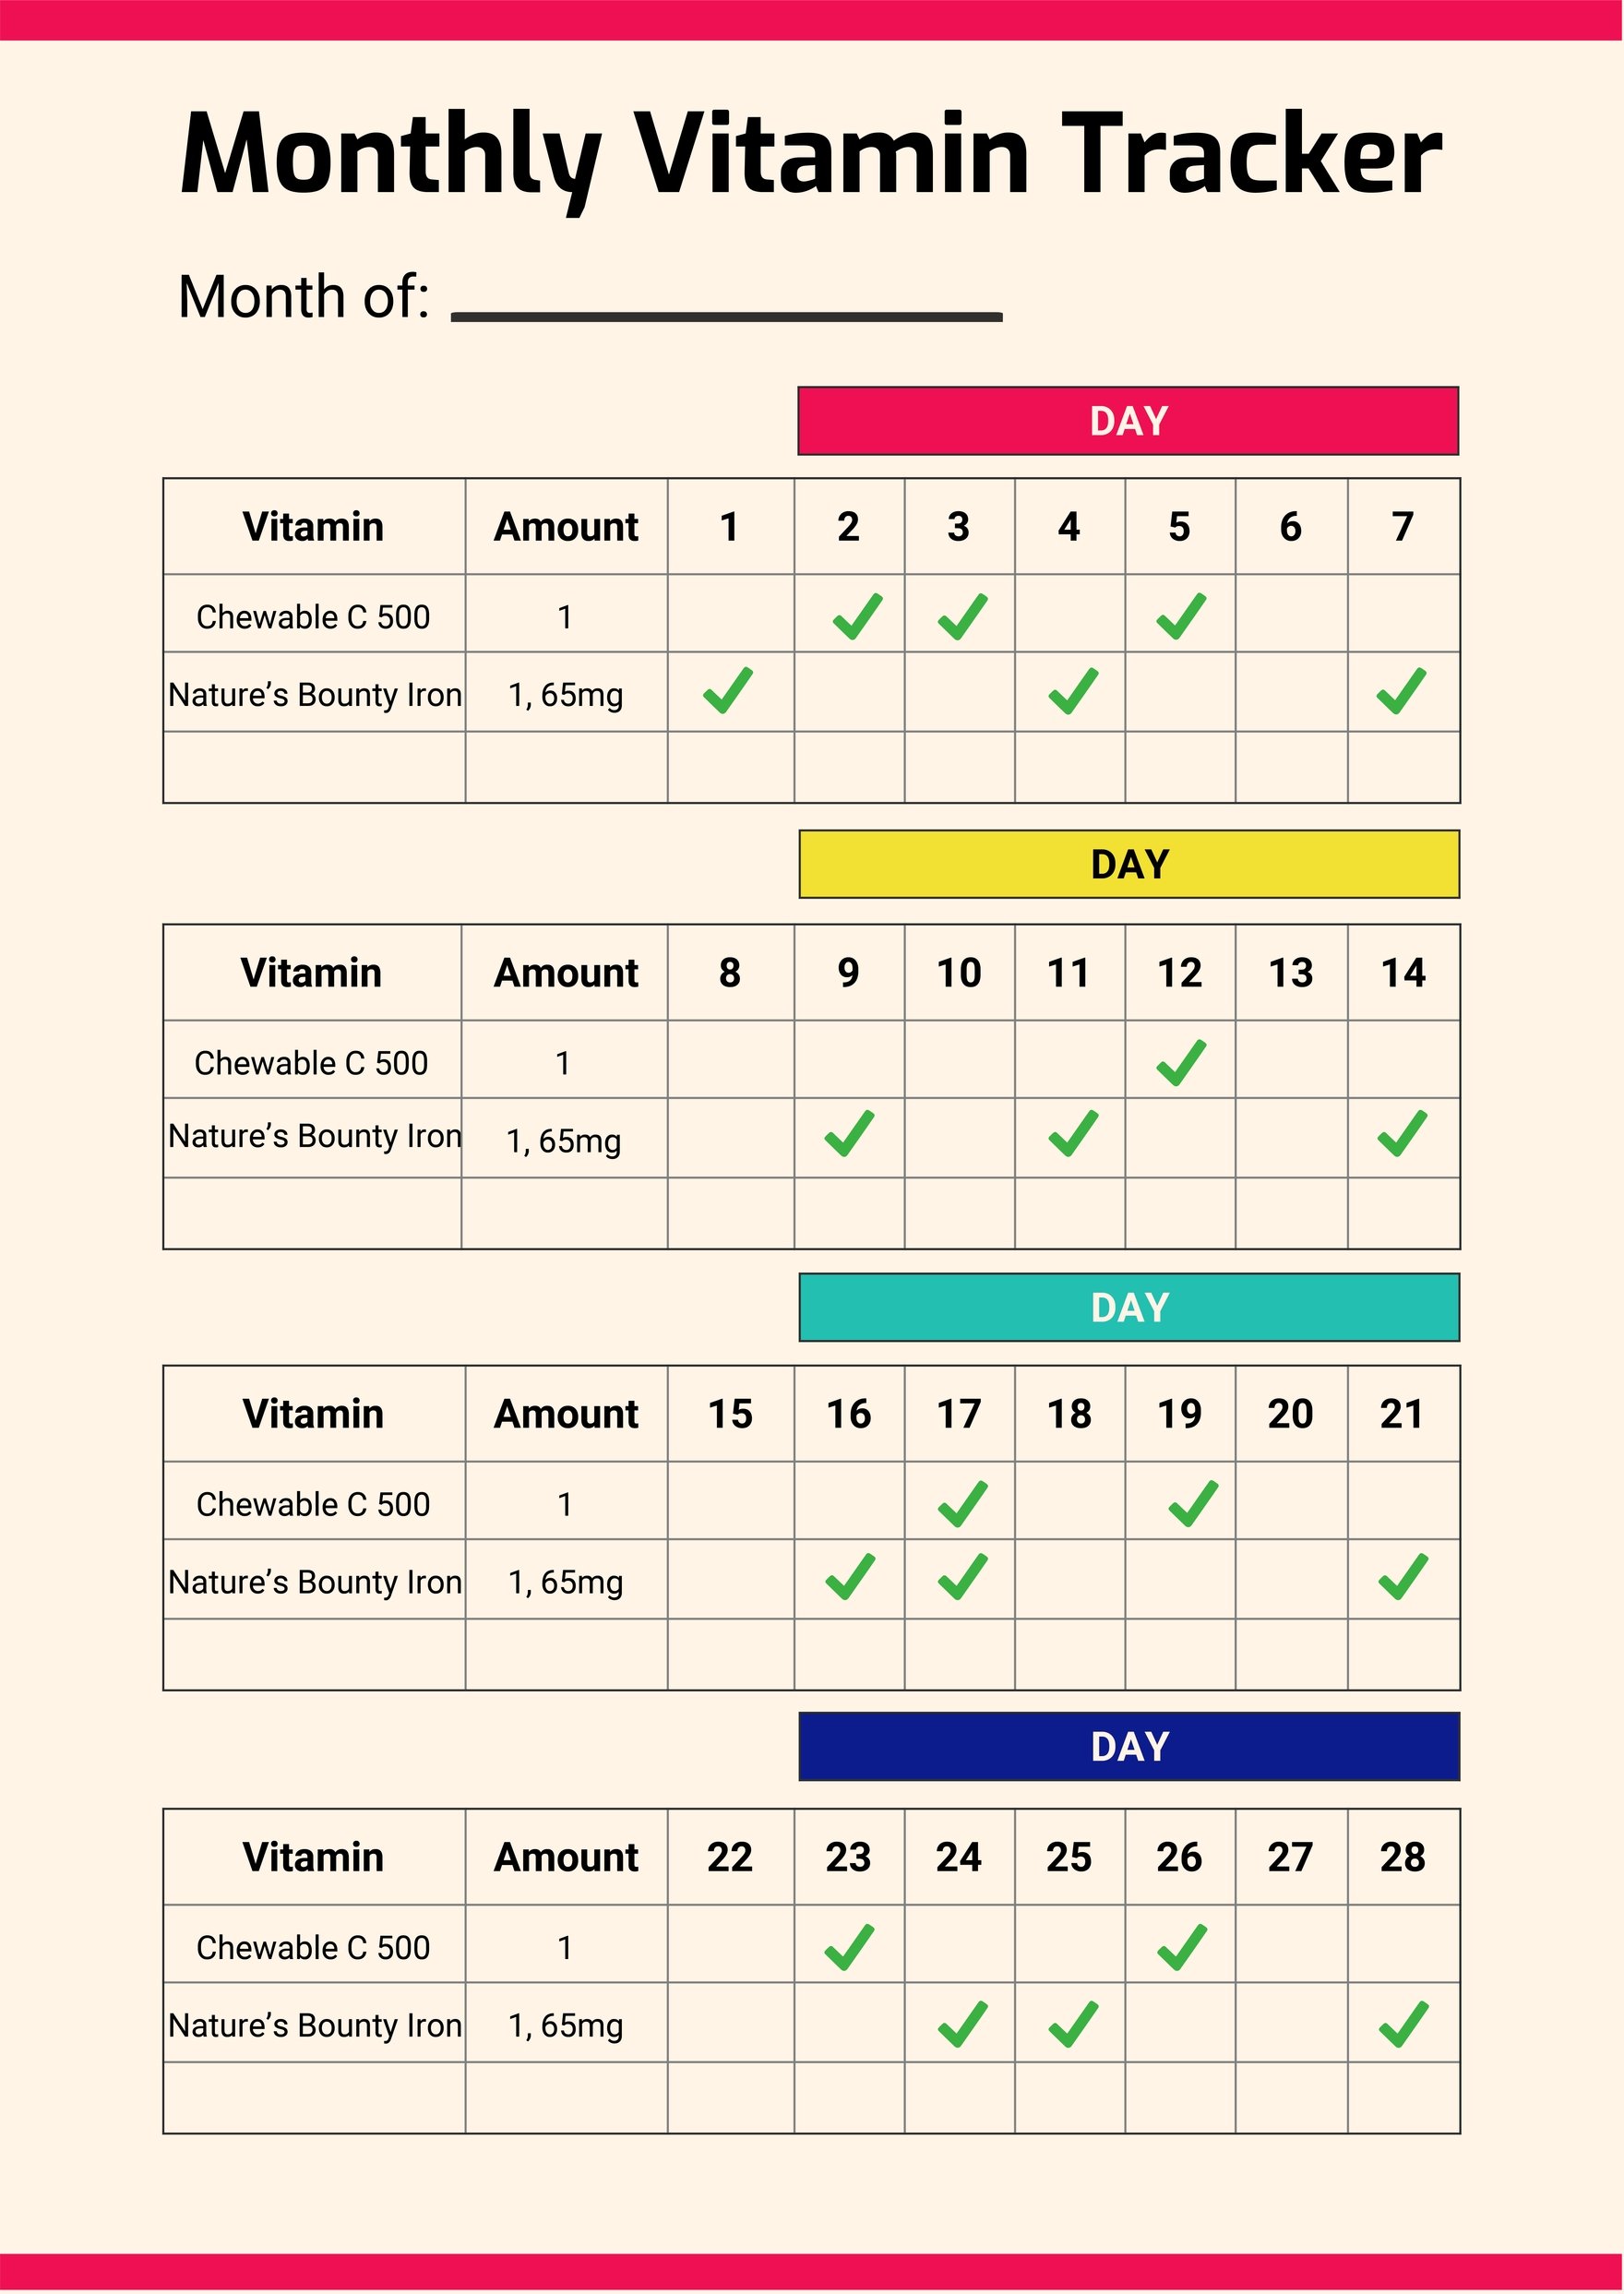 Monthly Vitamin Tracker Chart in PDF, Illustrator